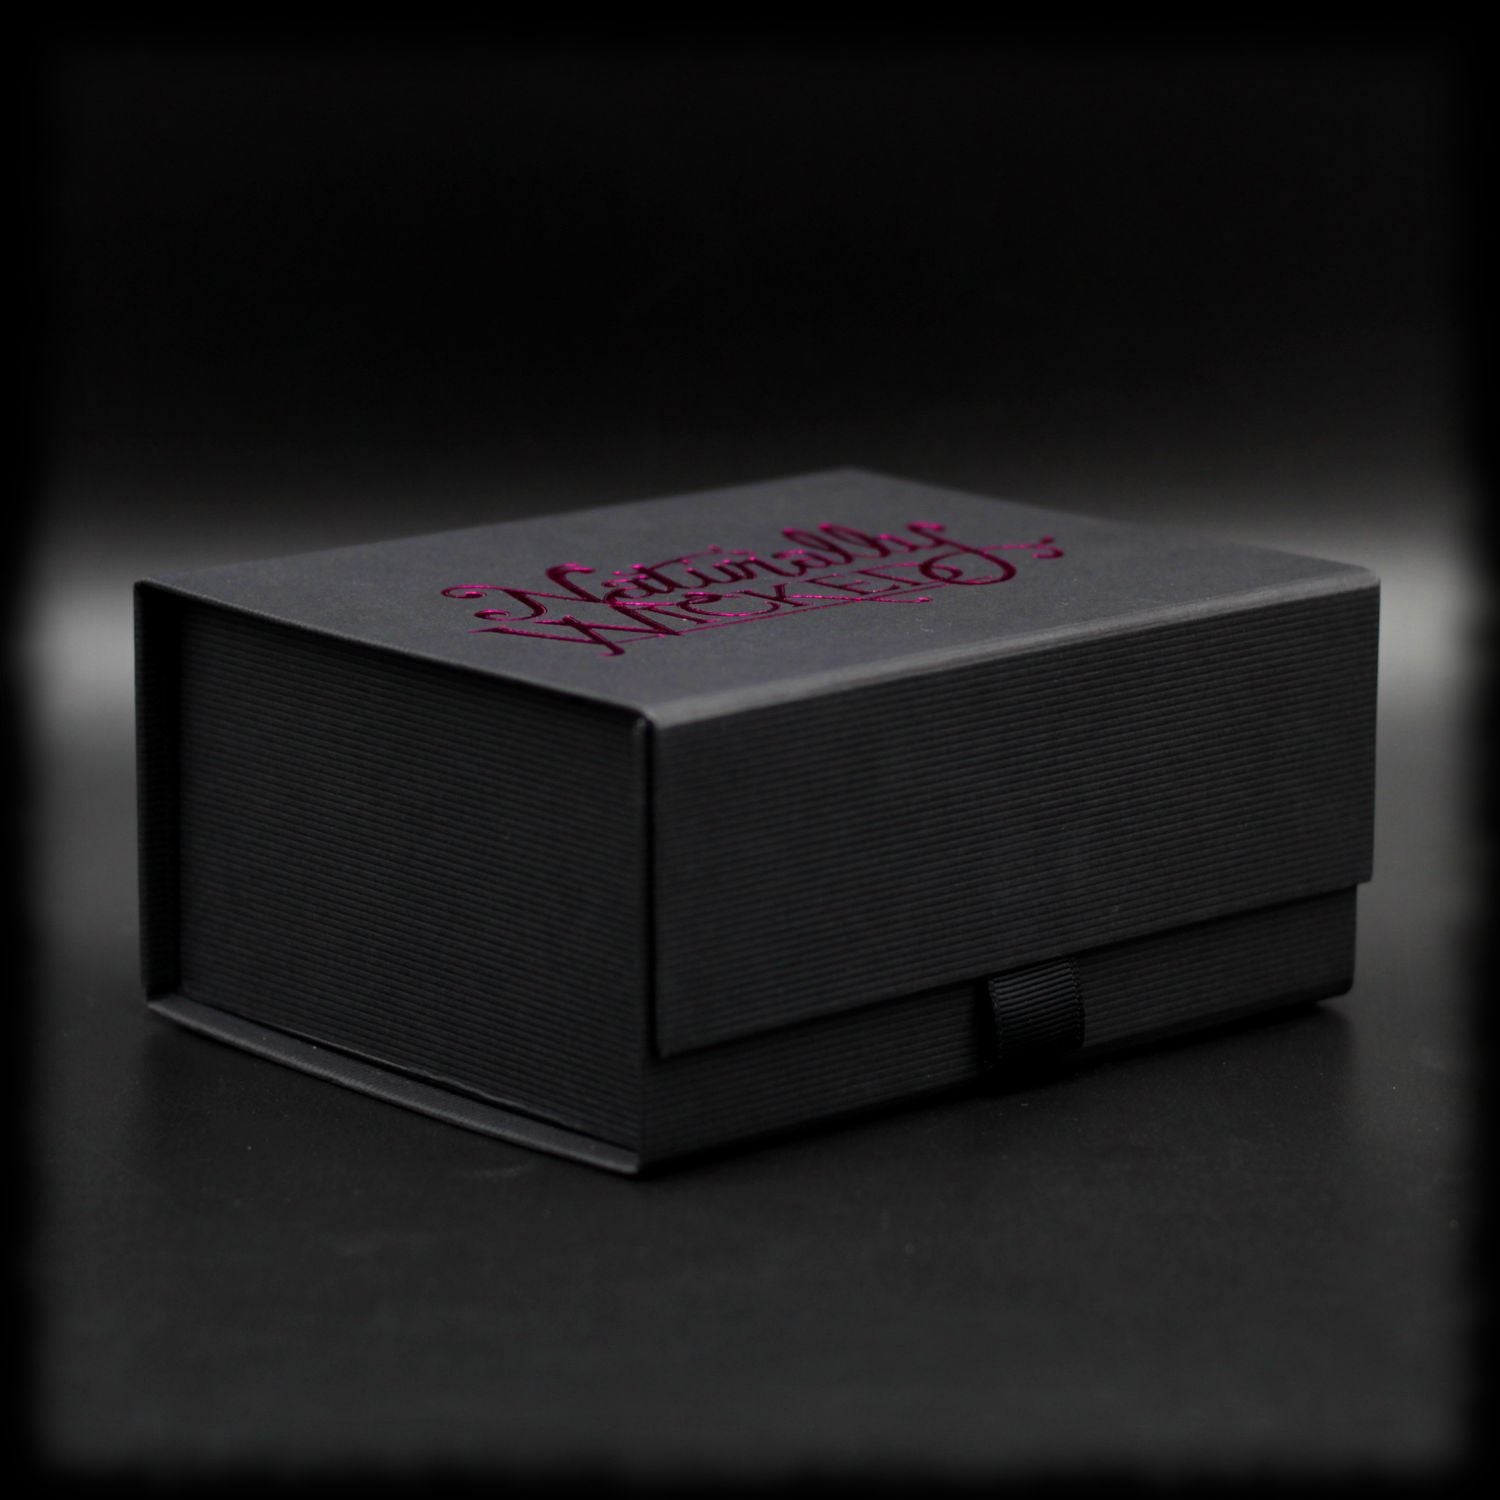 Naturally Wicked Original 3 Step Beauty Kit Box; Dark black with Metallic Pink Naturally Wicked Logo